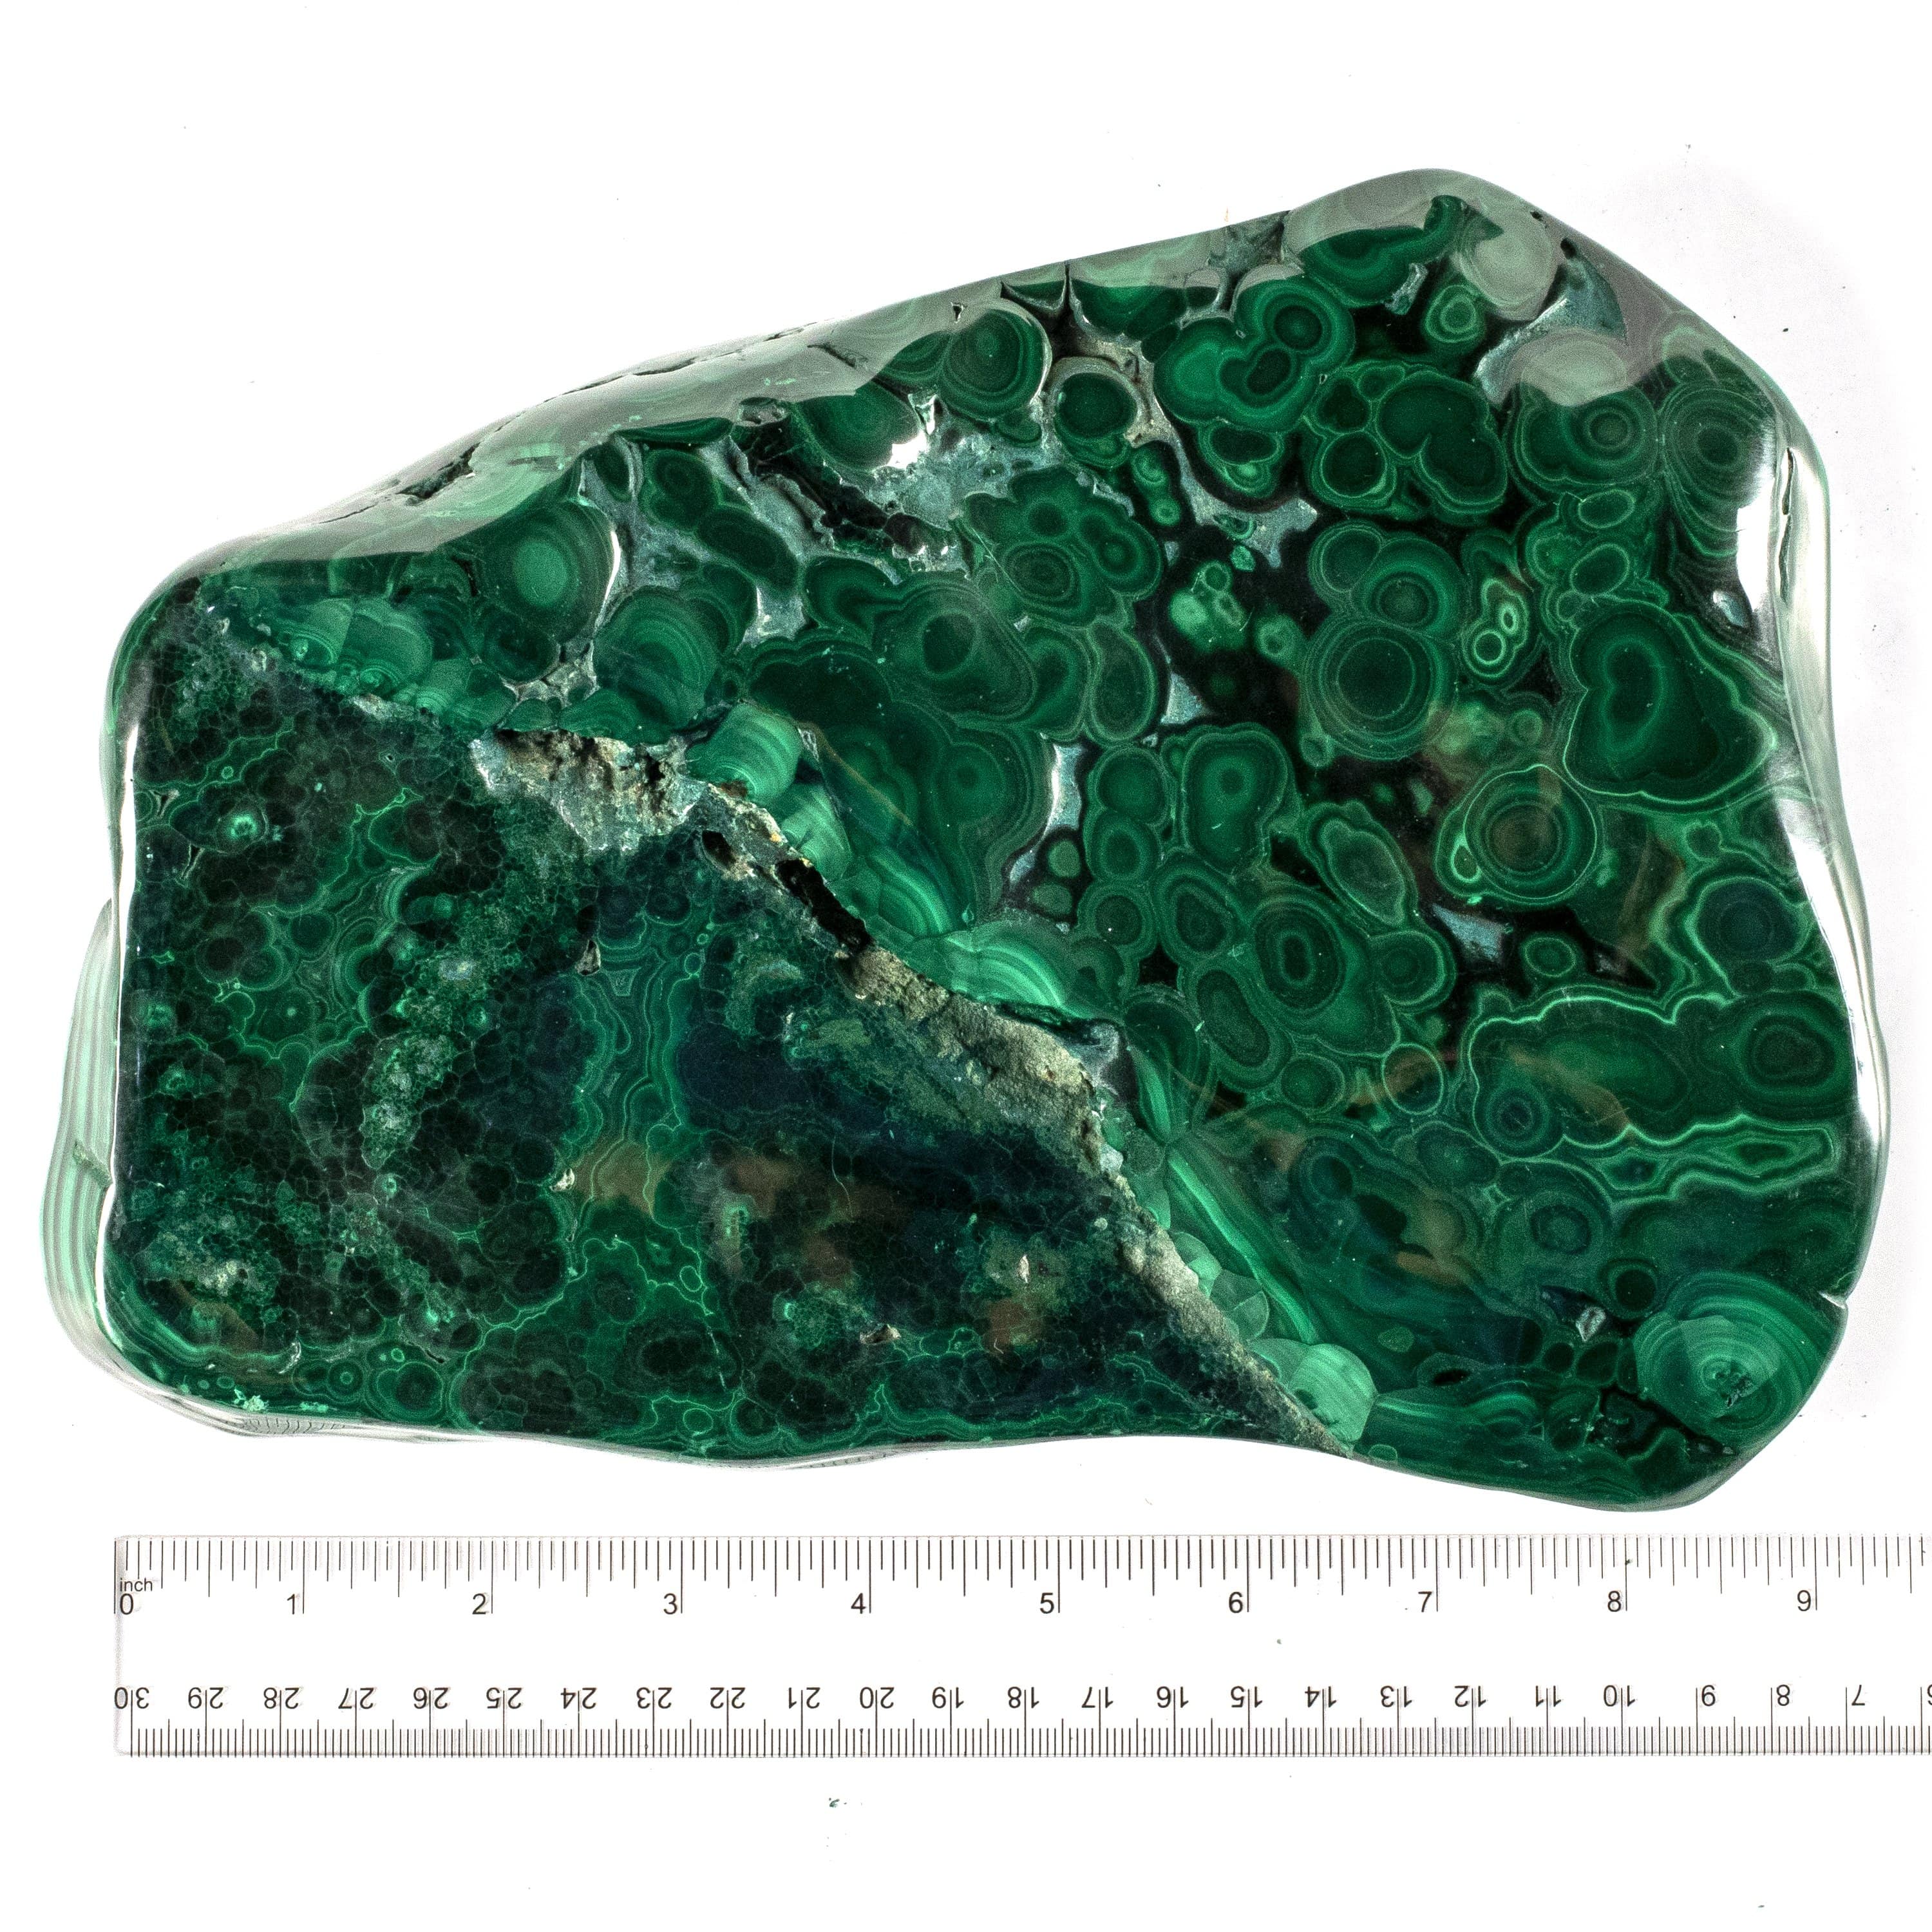 Kalifano Malachite Rare Natural Green Malachite Polished Freeform Specimen from Congo - 4.6 kg / 10.2 lbs MA2900.004